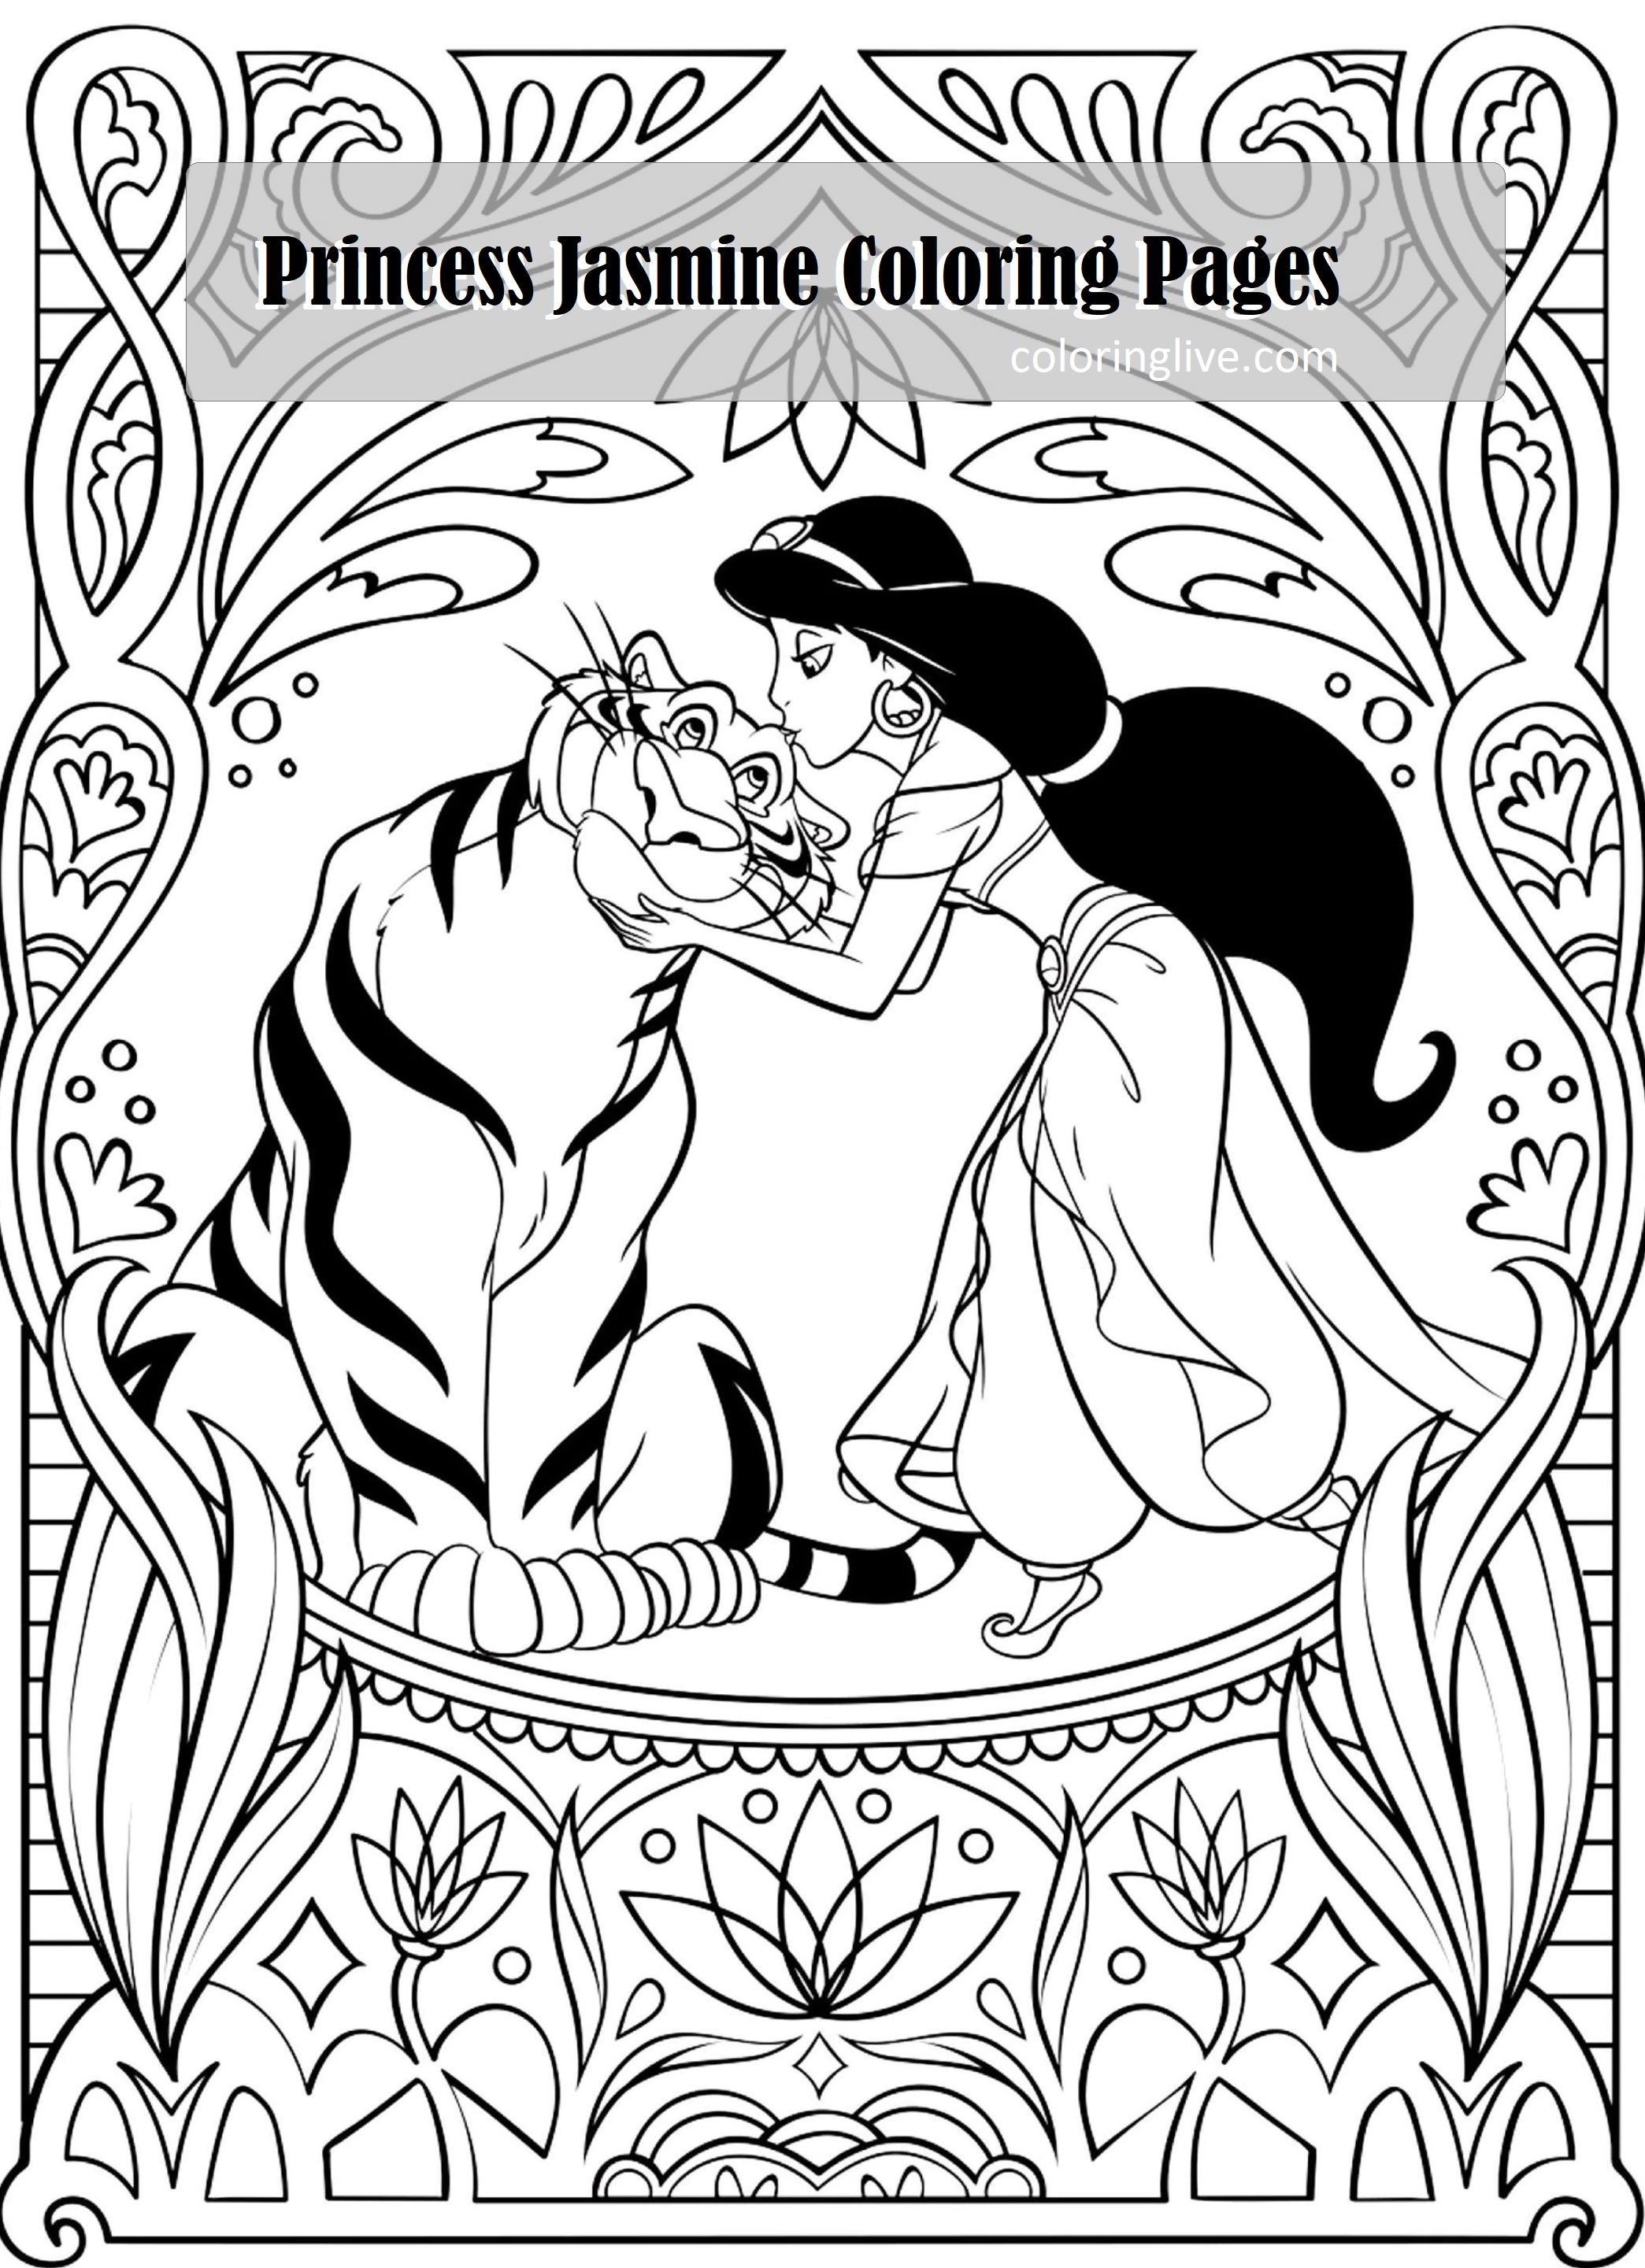 Printable Princess Jasmine and Tiger (Rajah) Cover Coloring Page for kids.